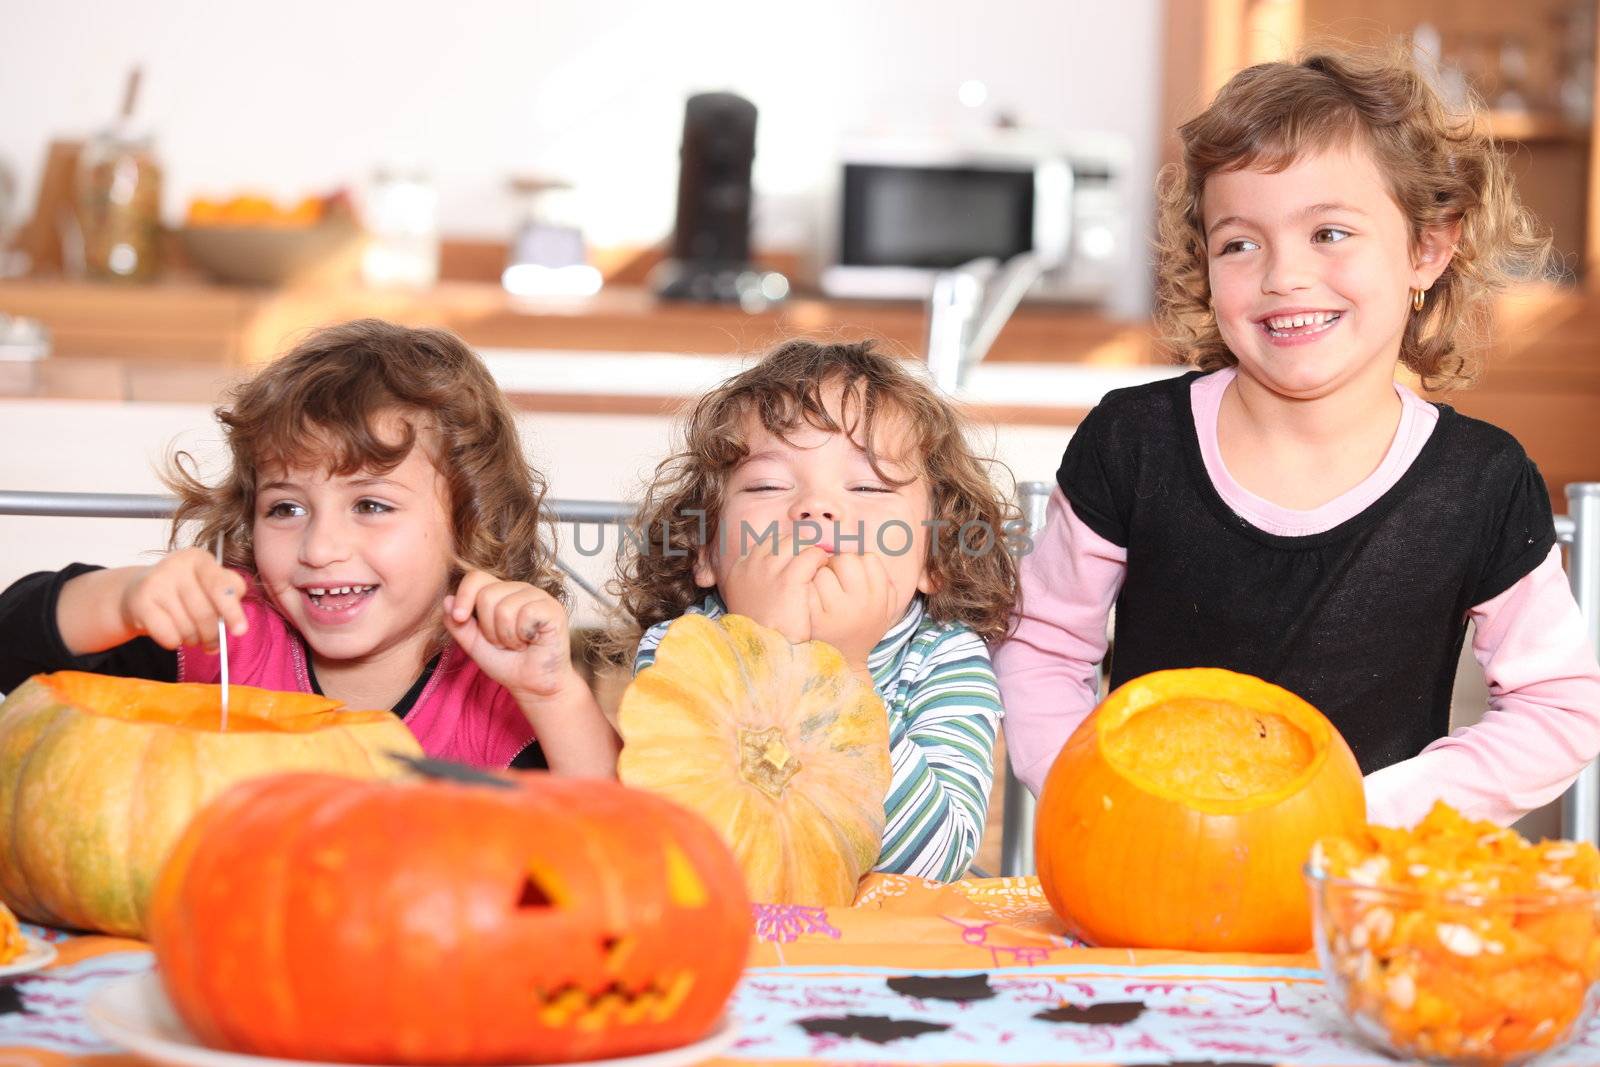 Funny Kids carving pumpkins by phovoir